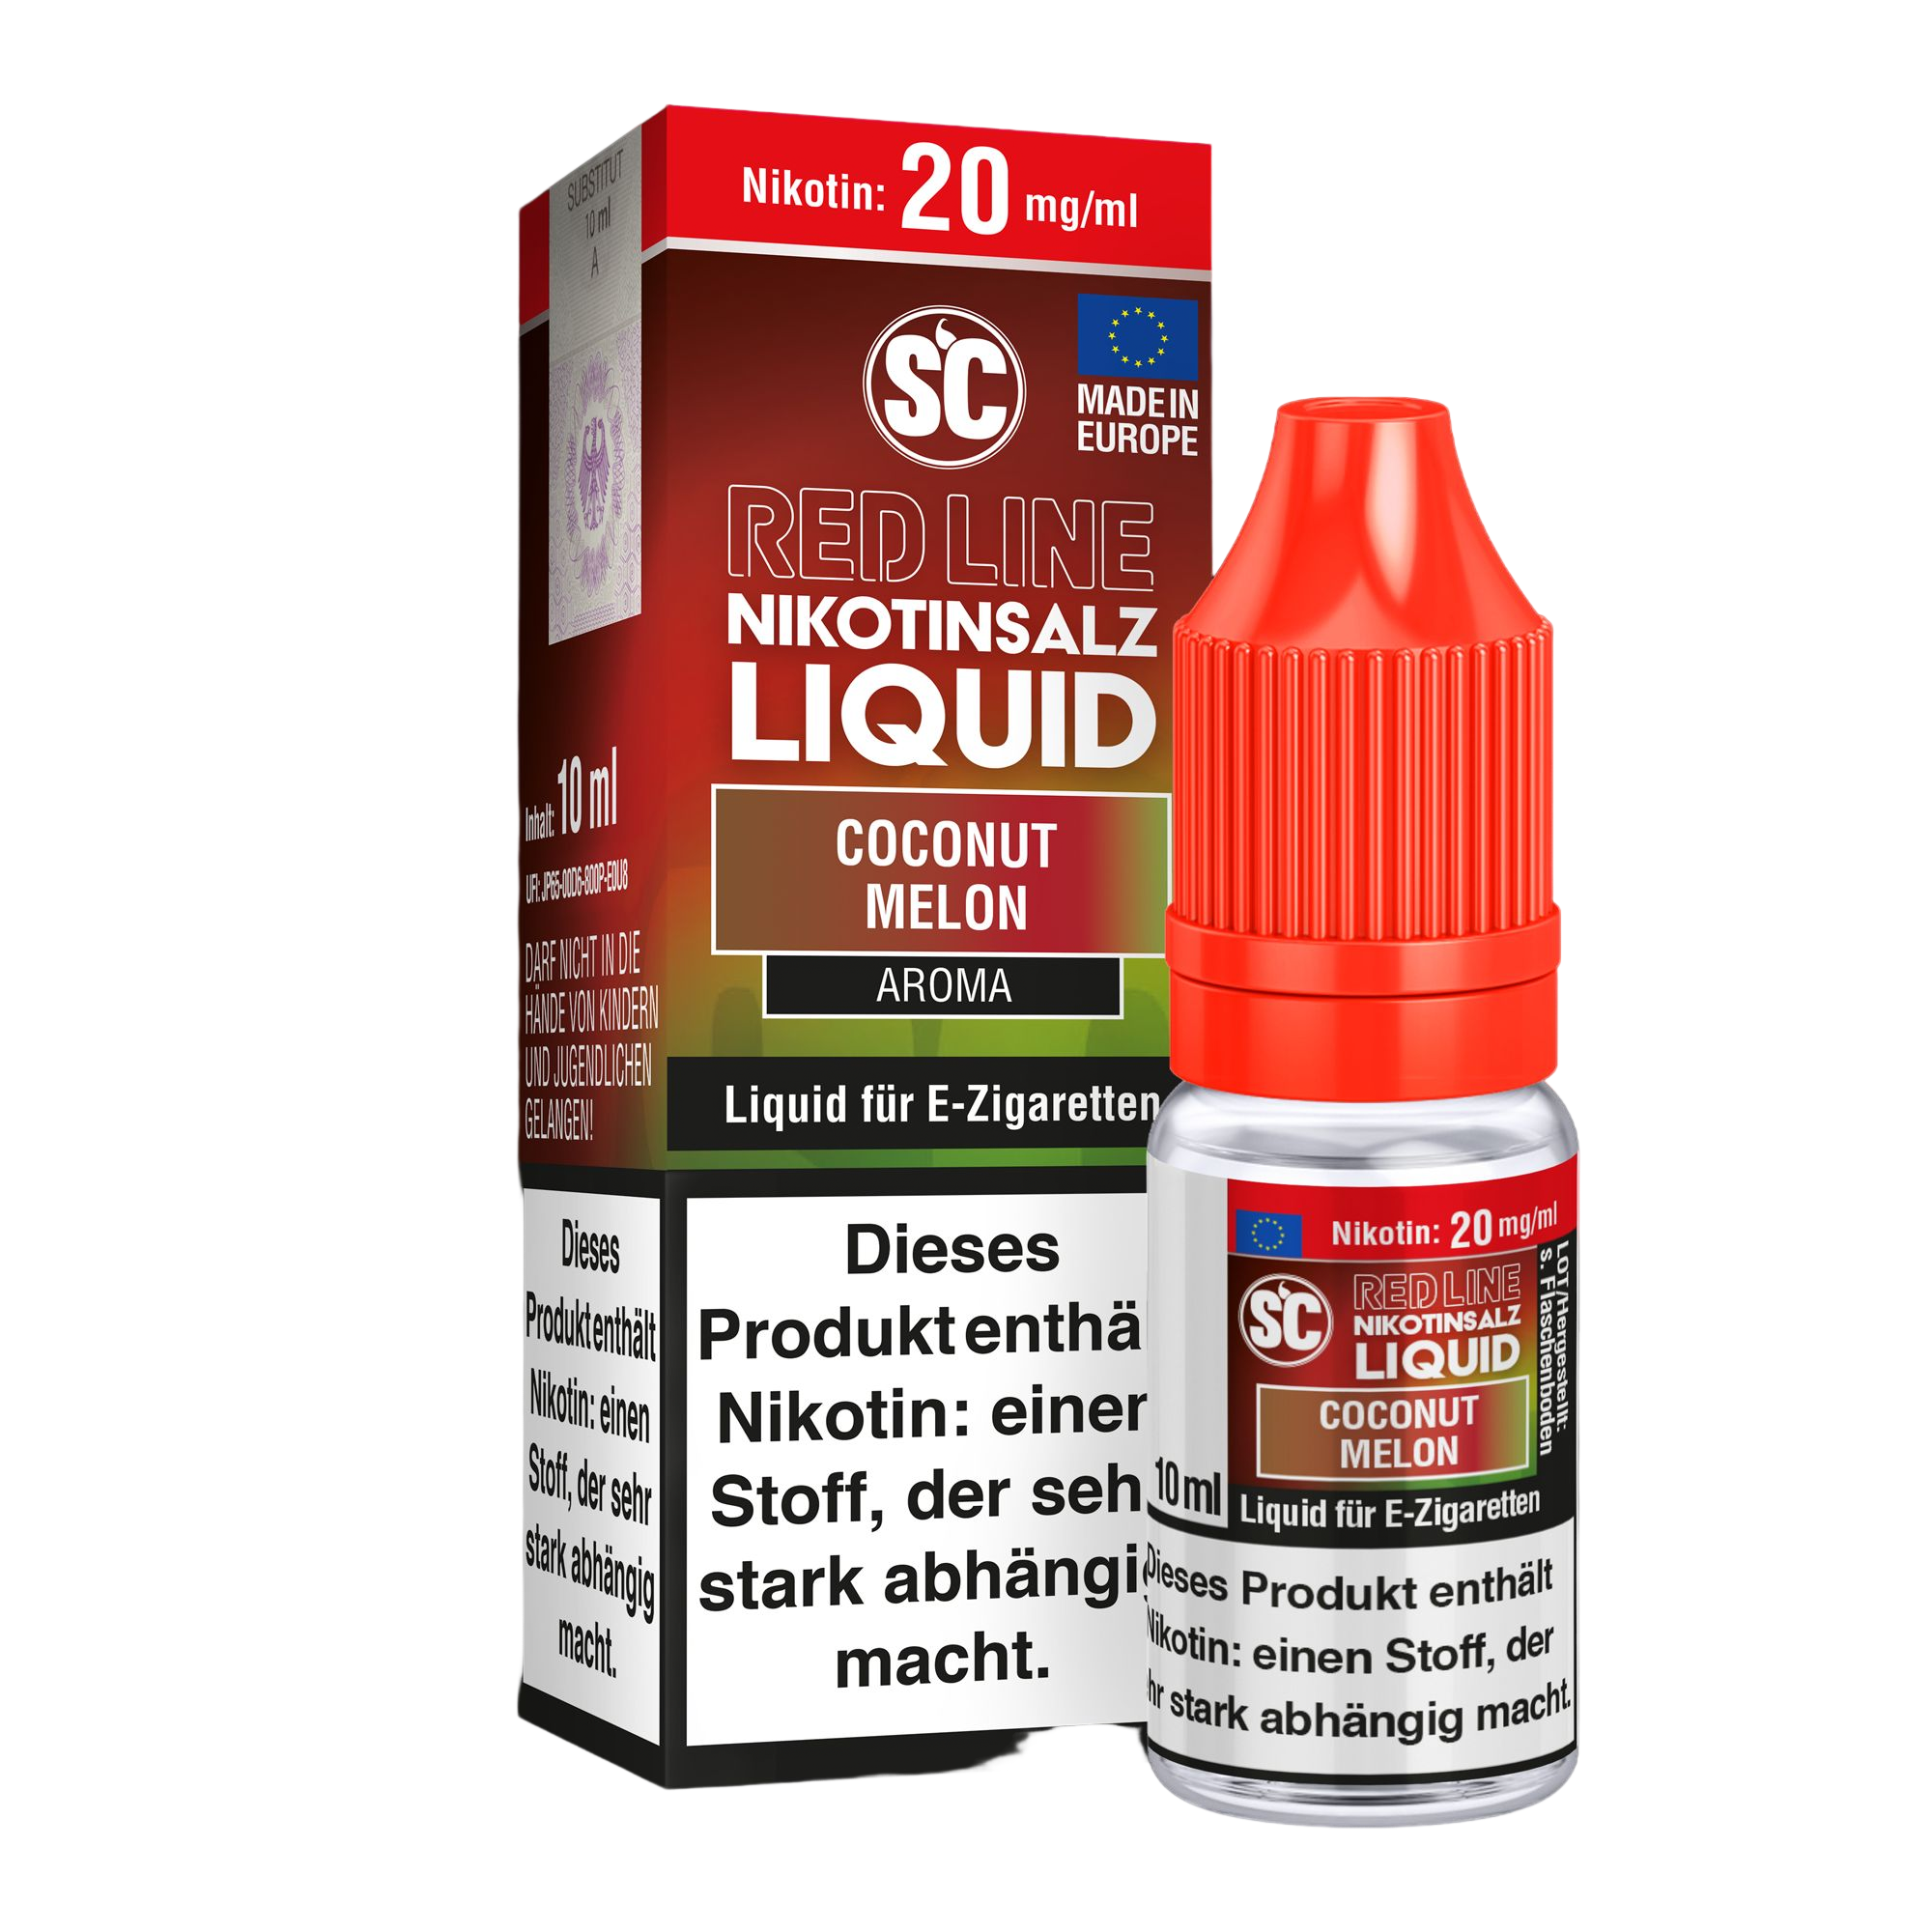 SC-RED LINE Coconut Melon - Nikotinsalz Liquid 20 mg/ml